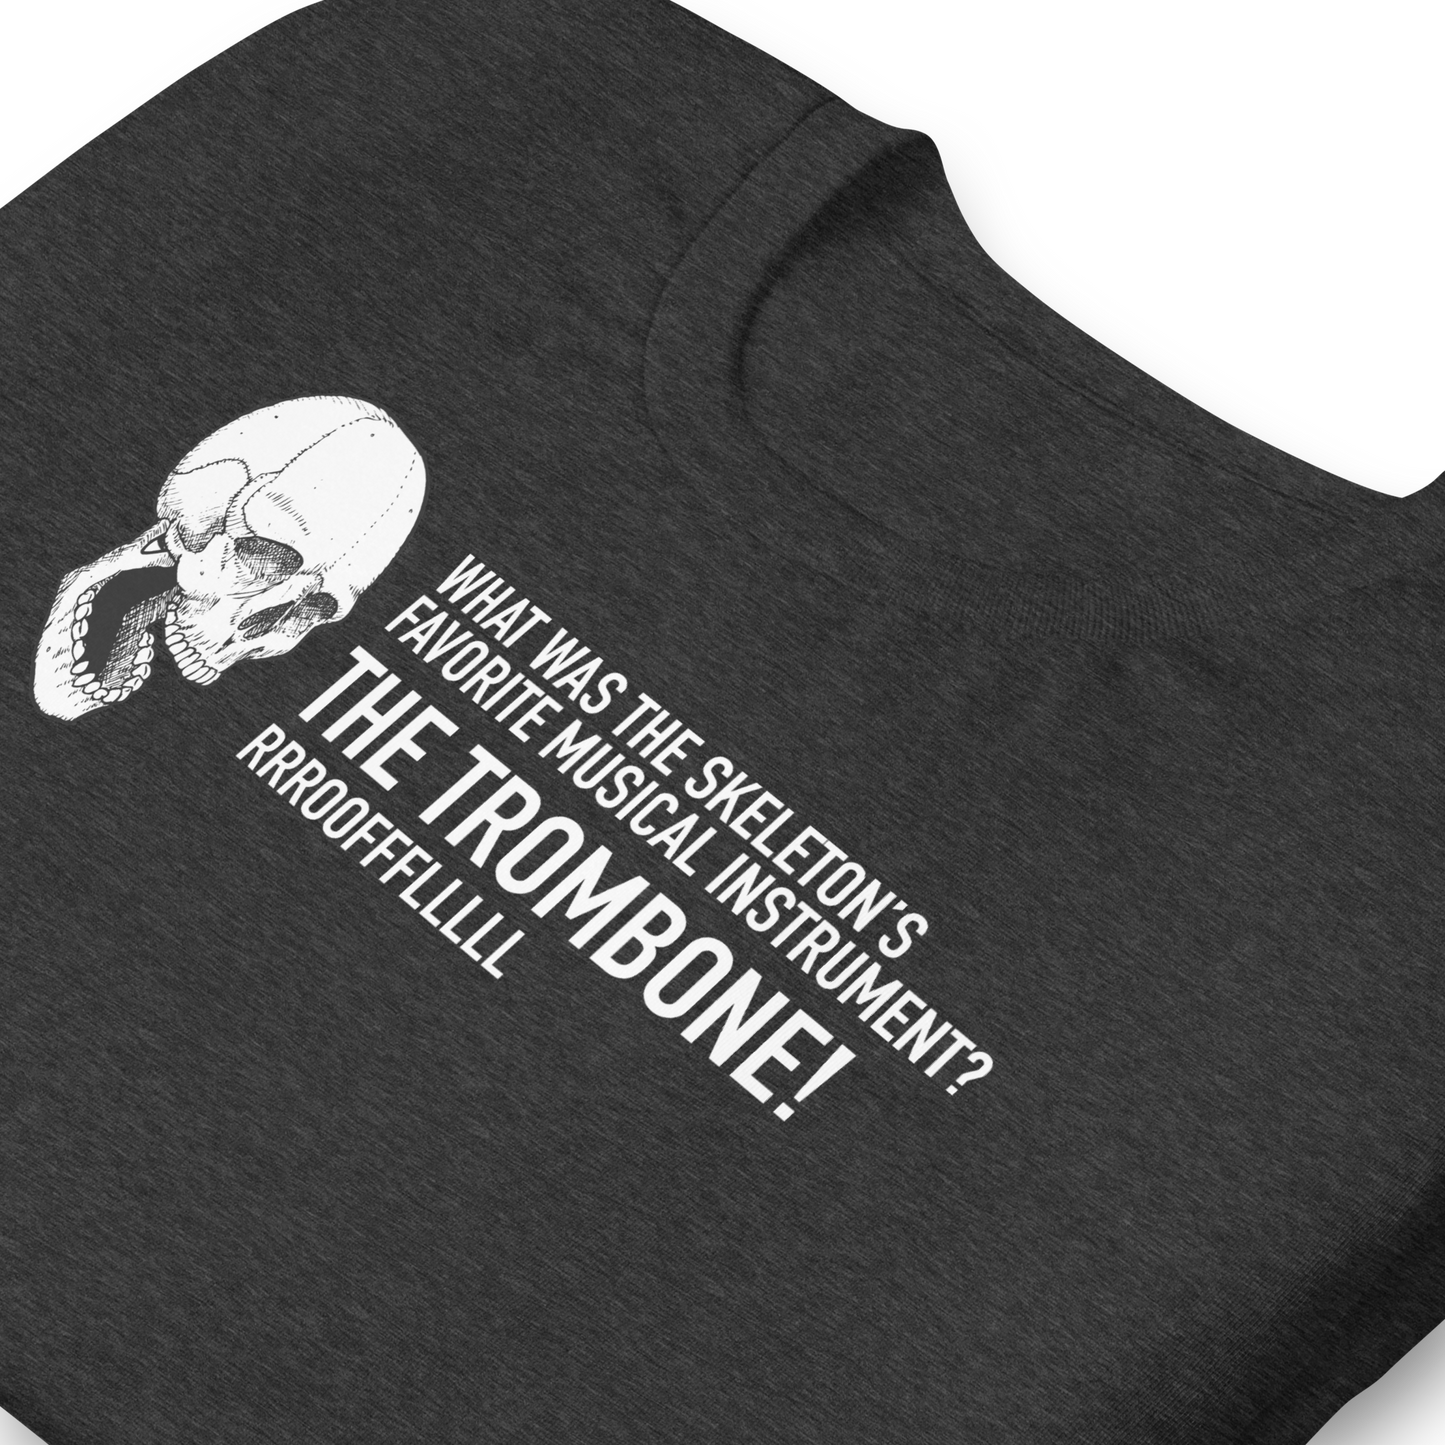 Unisex - Halloween Skeleton Dad Joke - THE TROMBONE!  - Funny T-shirt